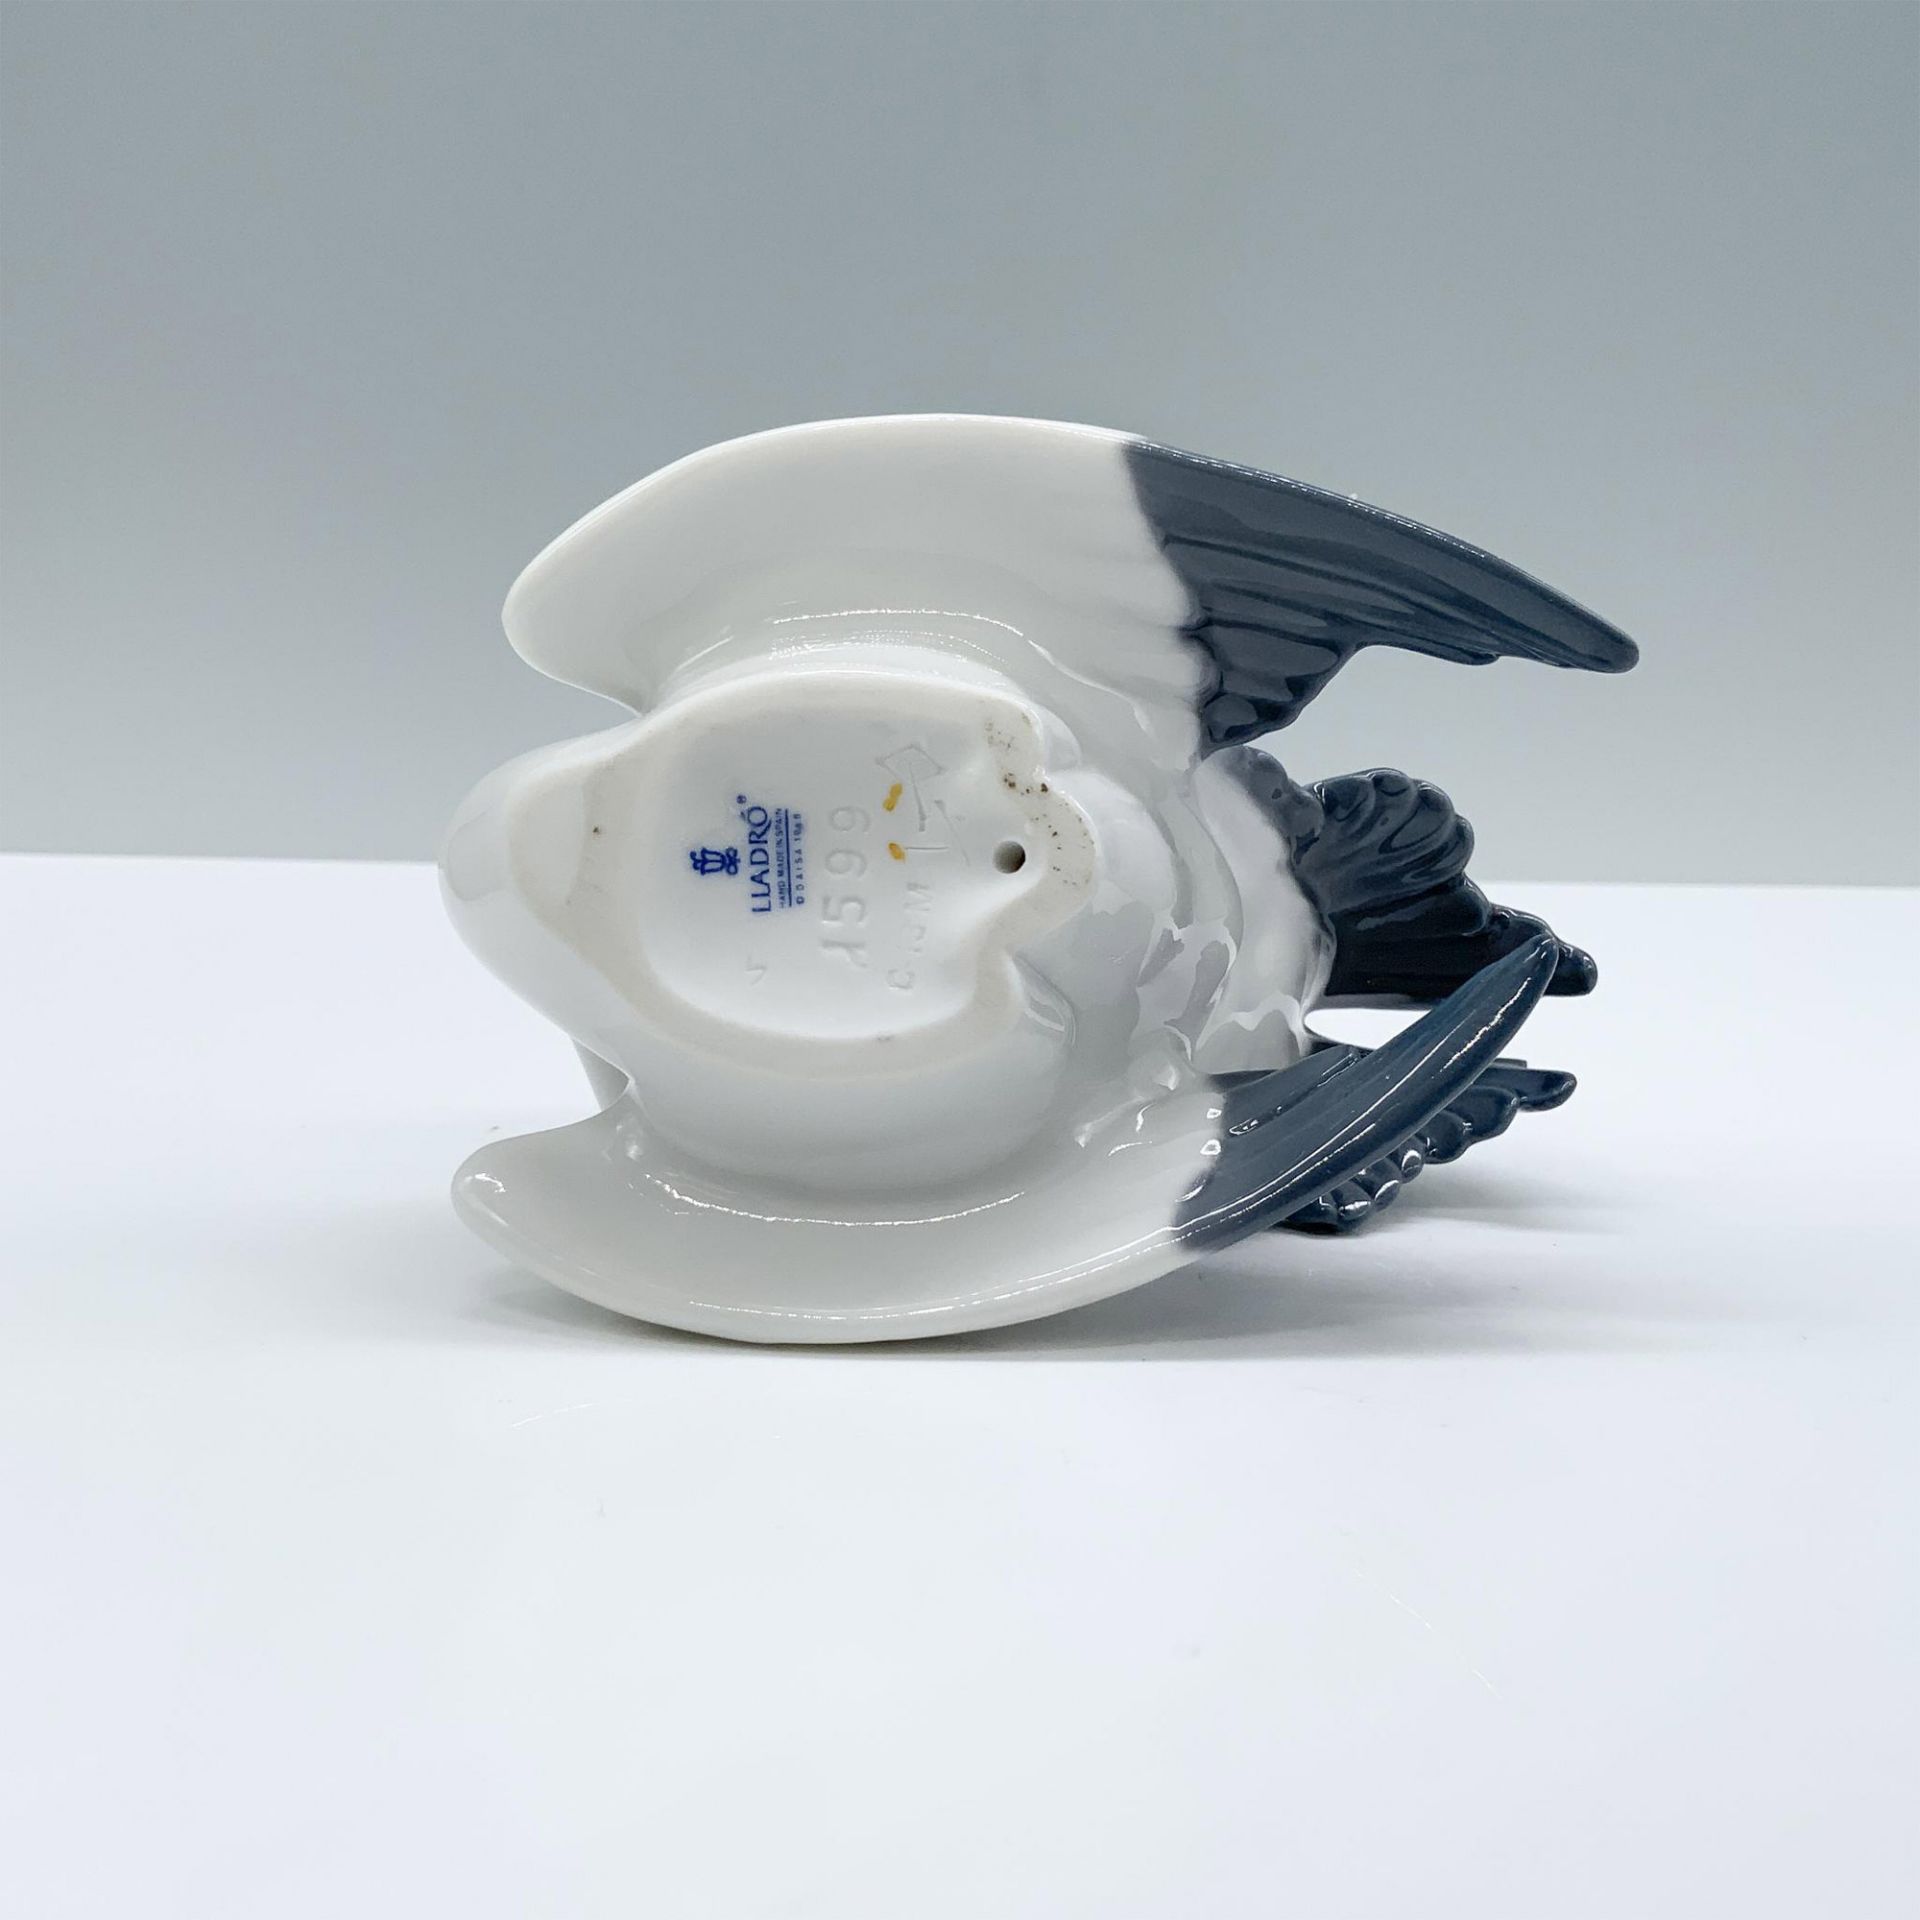 Nesting Crane 1001599 - Lladro Porcelain Figurine - Image 3 of 4